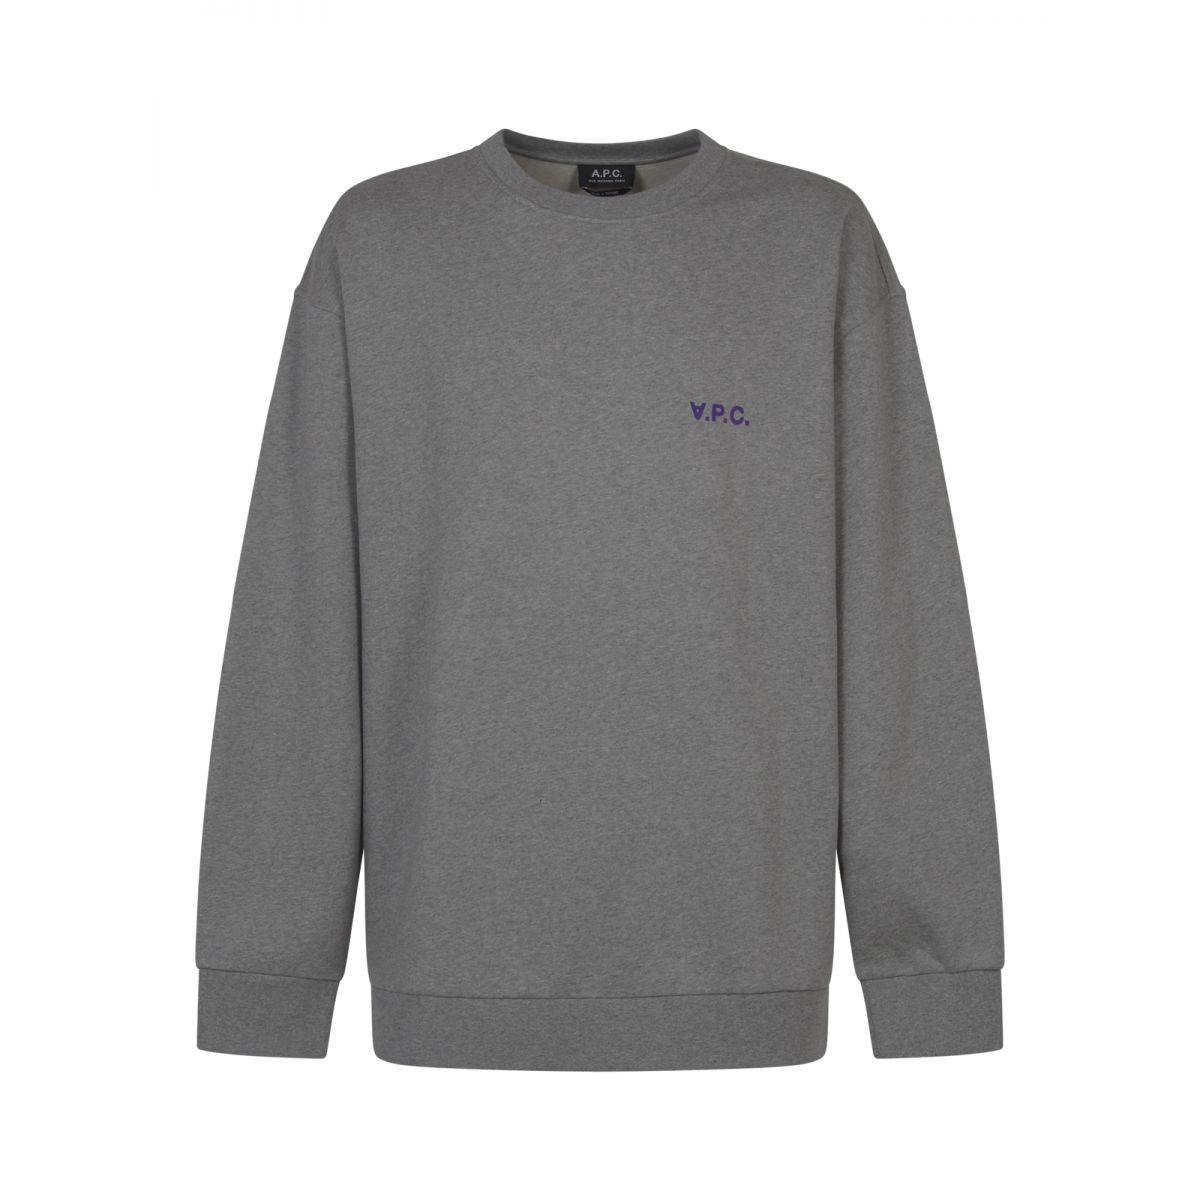 A.P.C - Log-print cotton sweatshirt